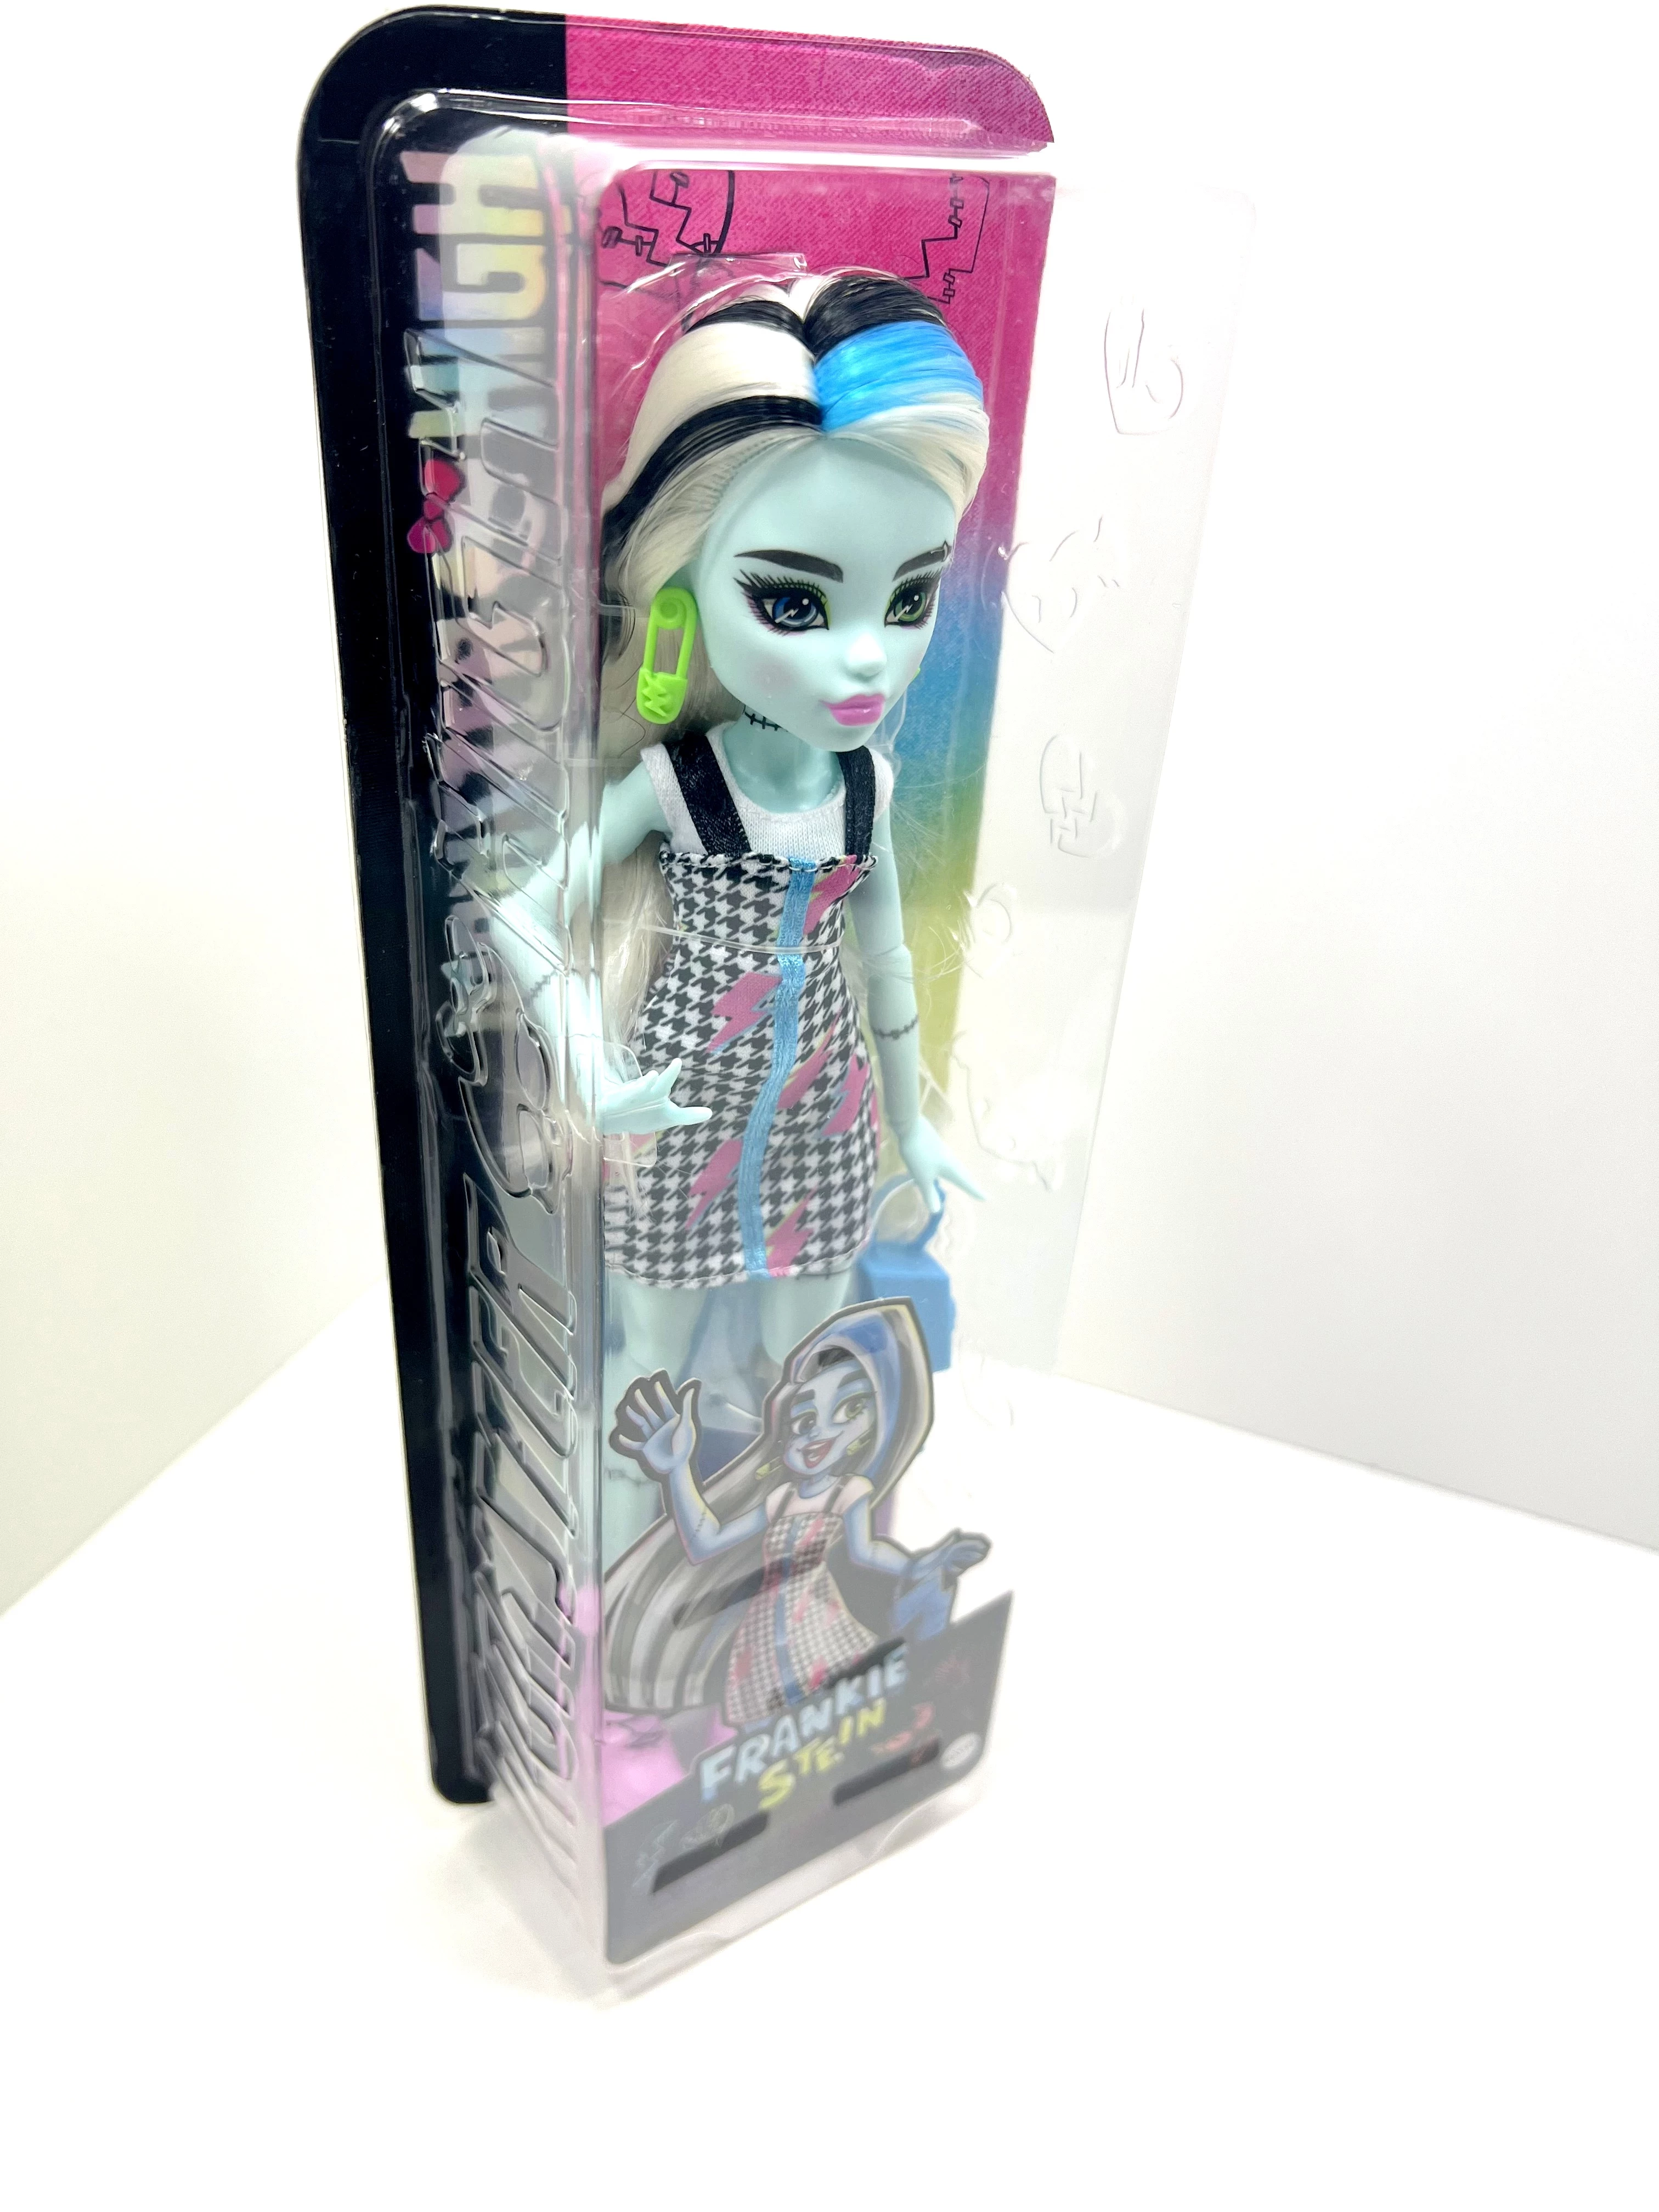 Boneca Monster High Frankie Stein Boo-original 2022 mattel no Shoptime